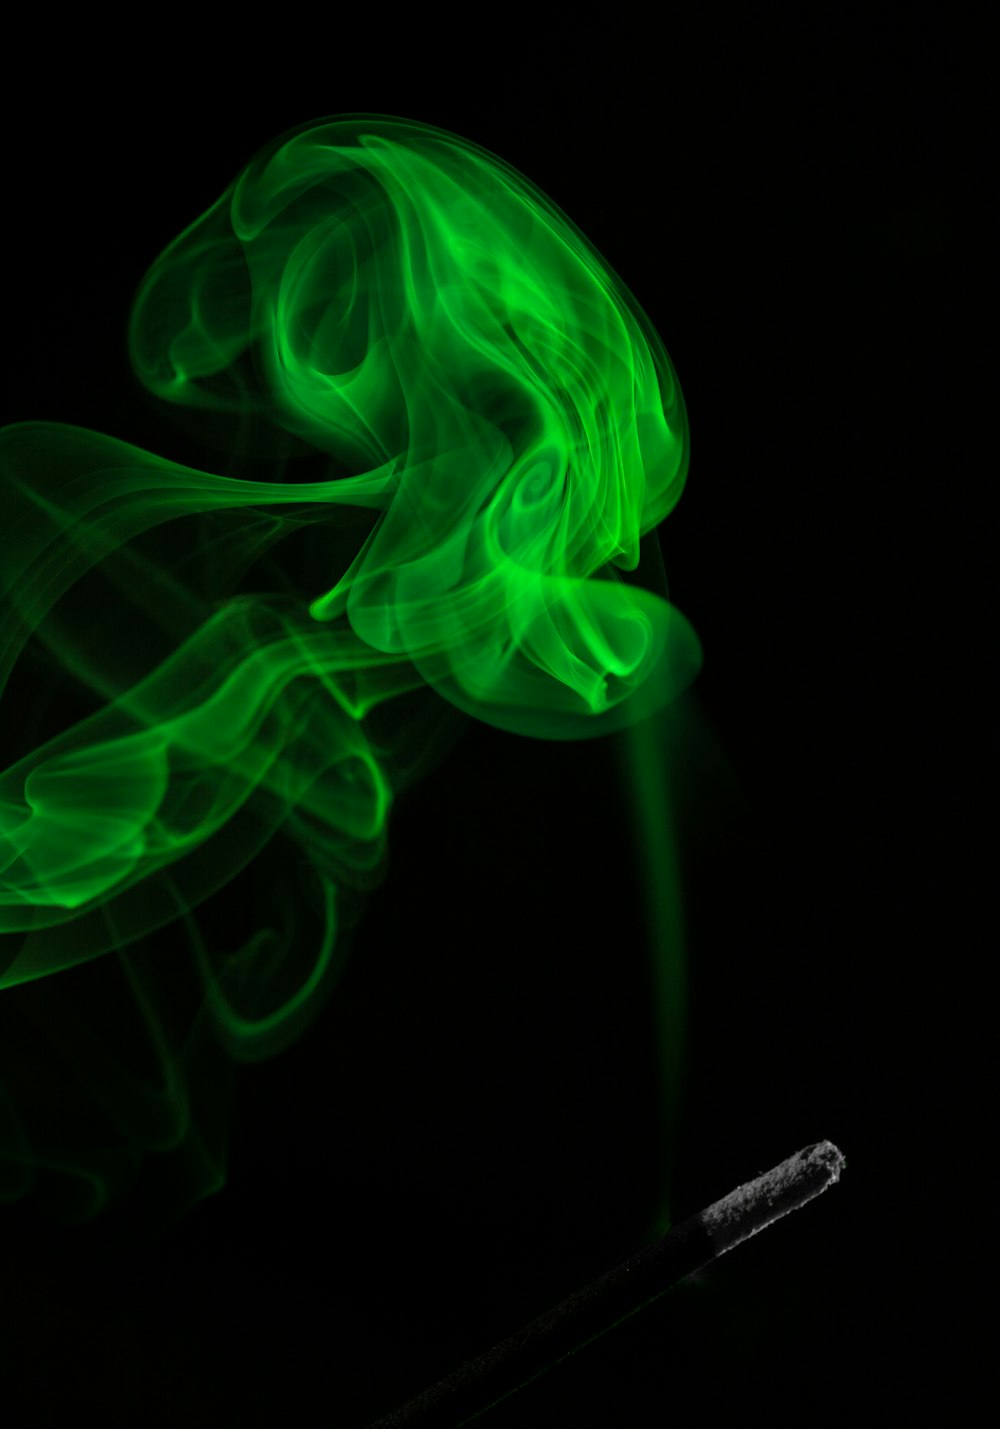 fumaça verde na luz fraca